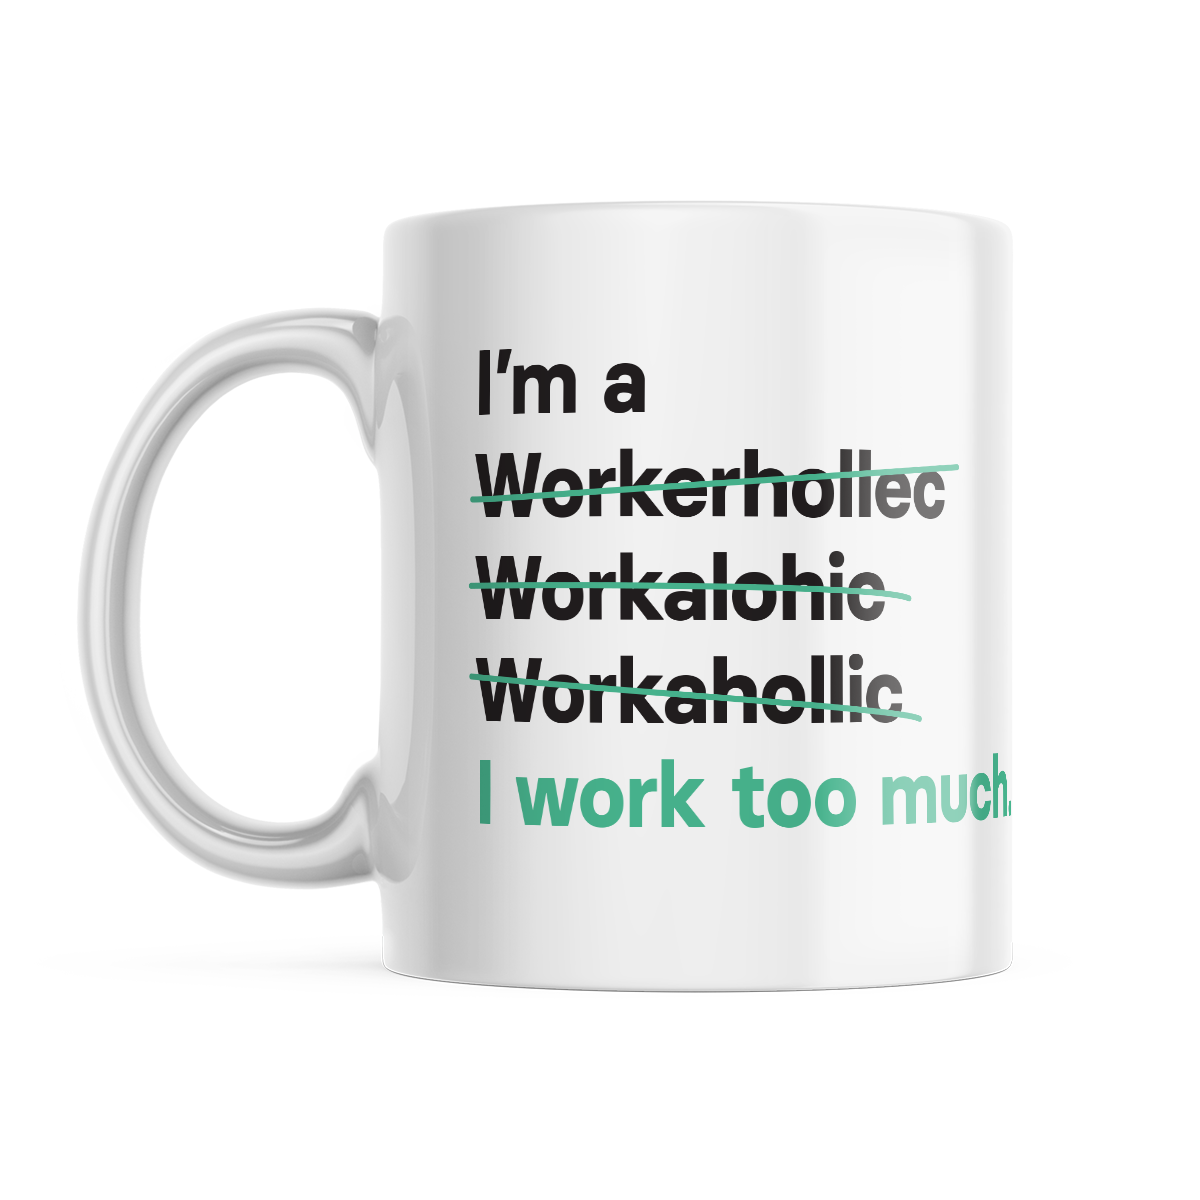 I'm a Workaholic